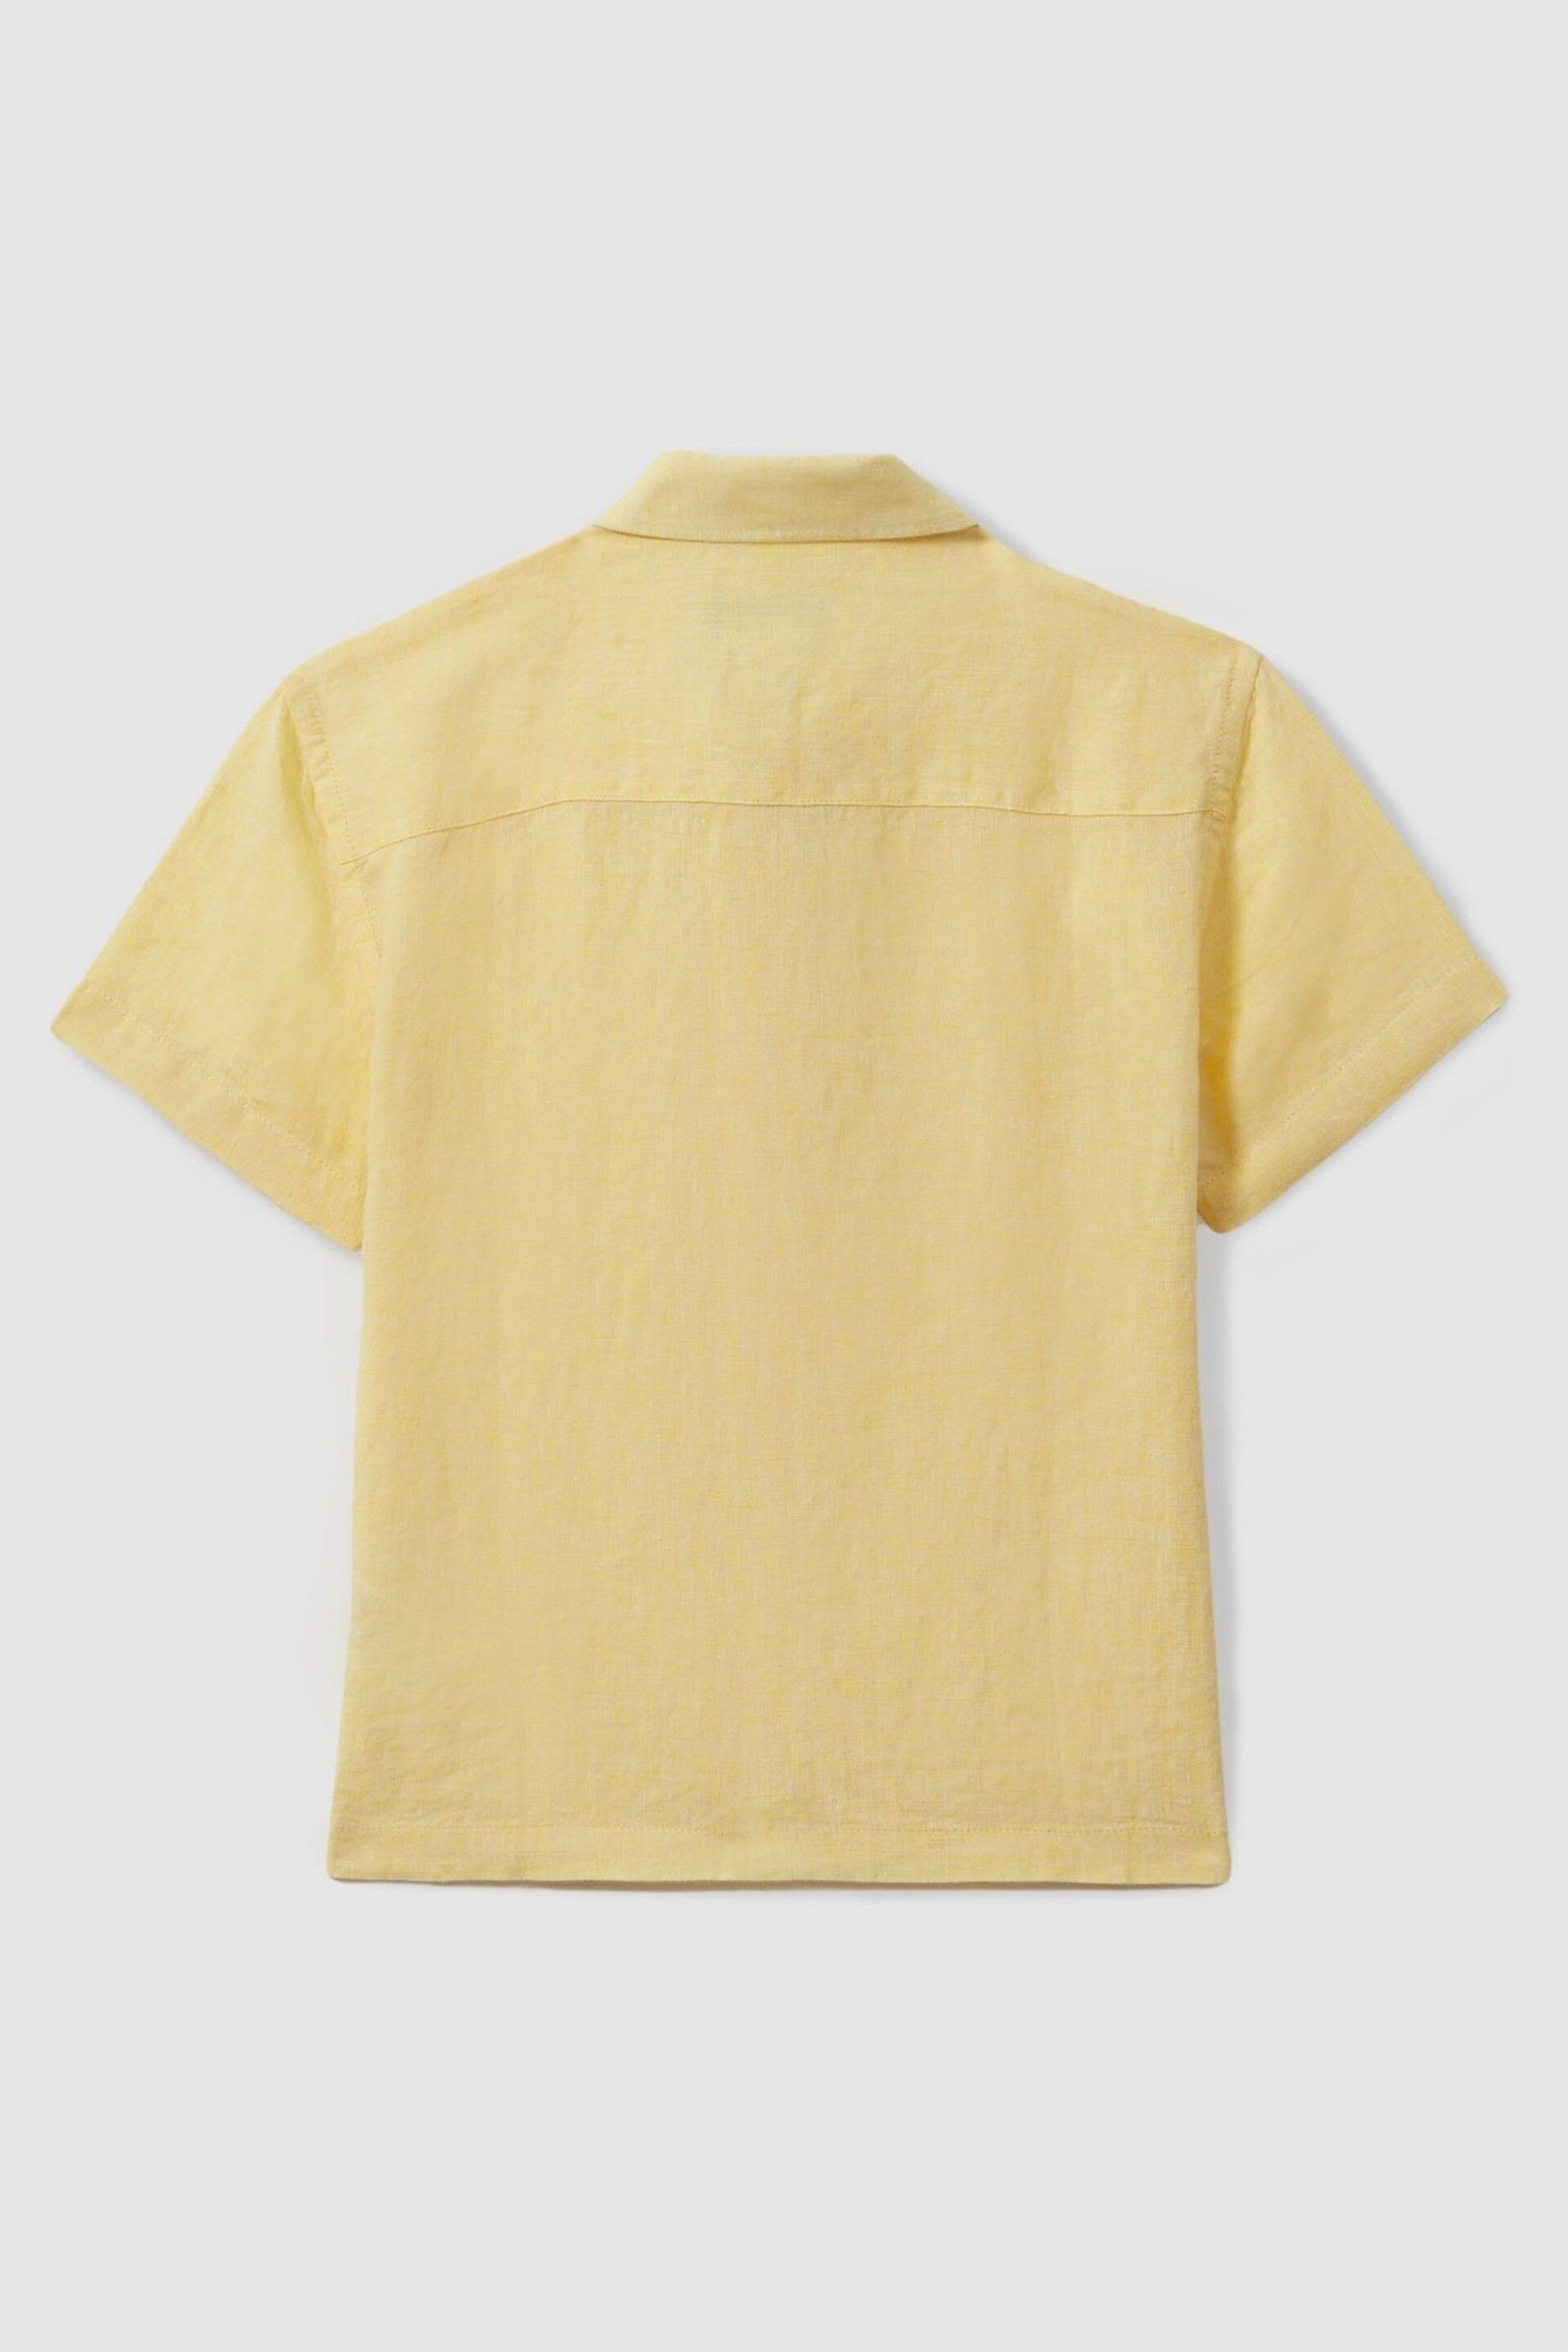 Reiss Melon Holiday Short Sleeve Linen Shirt - Image 2 of 3